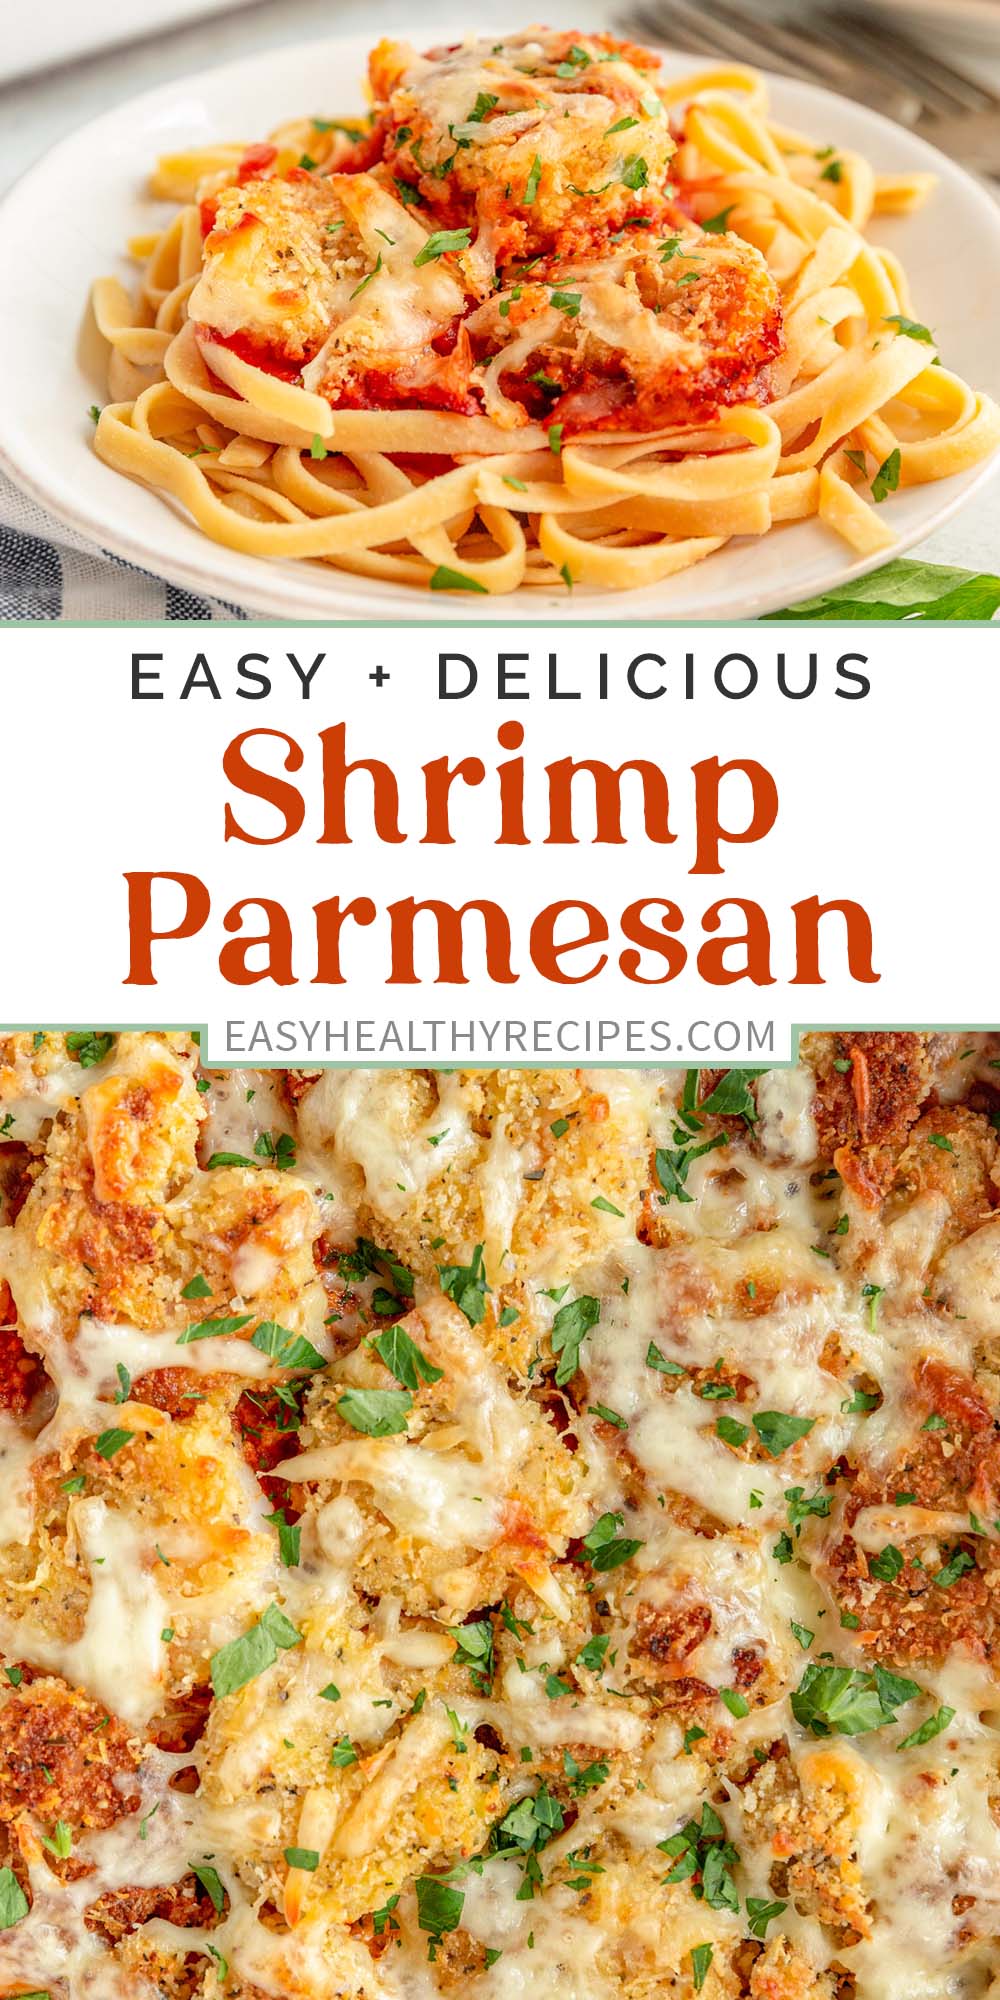 Pin graphic for shrimp parmesan.